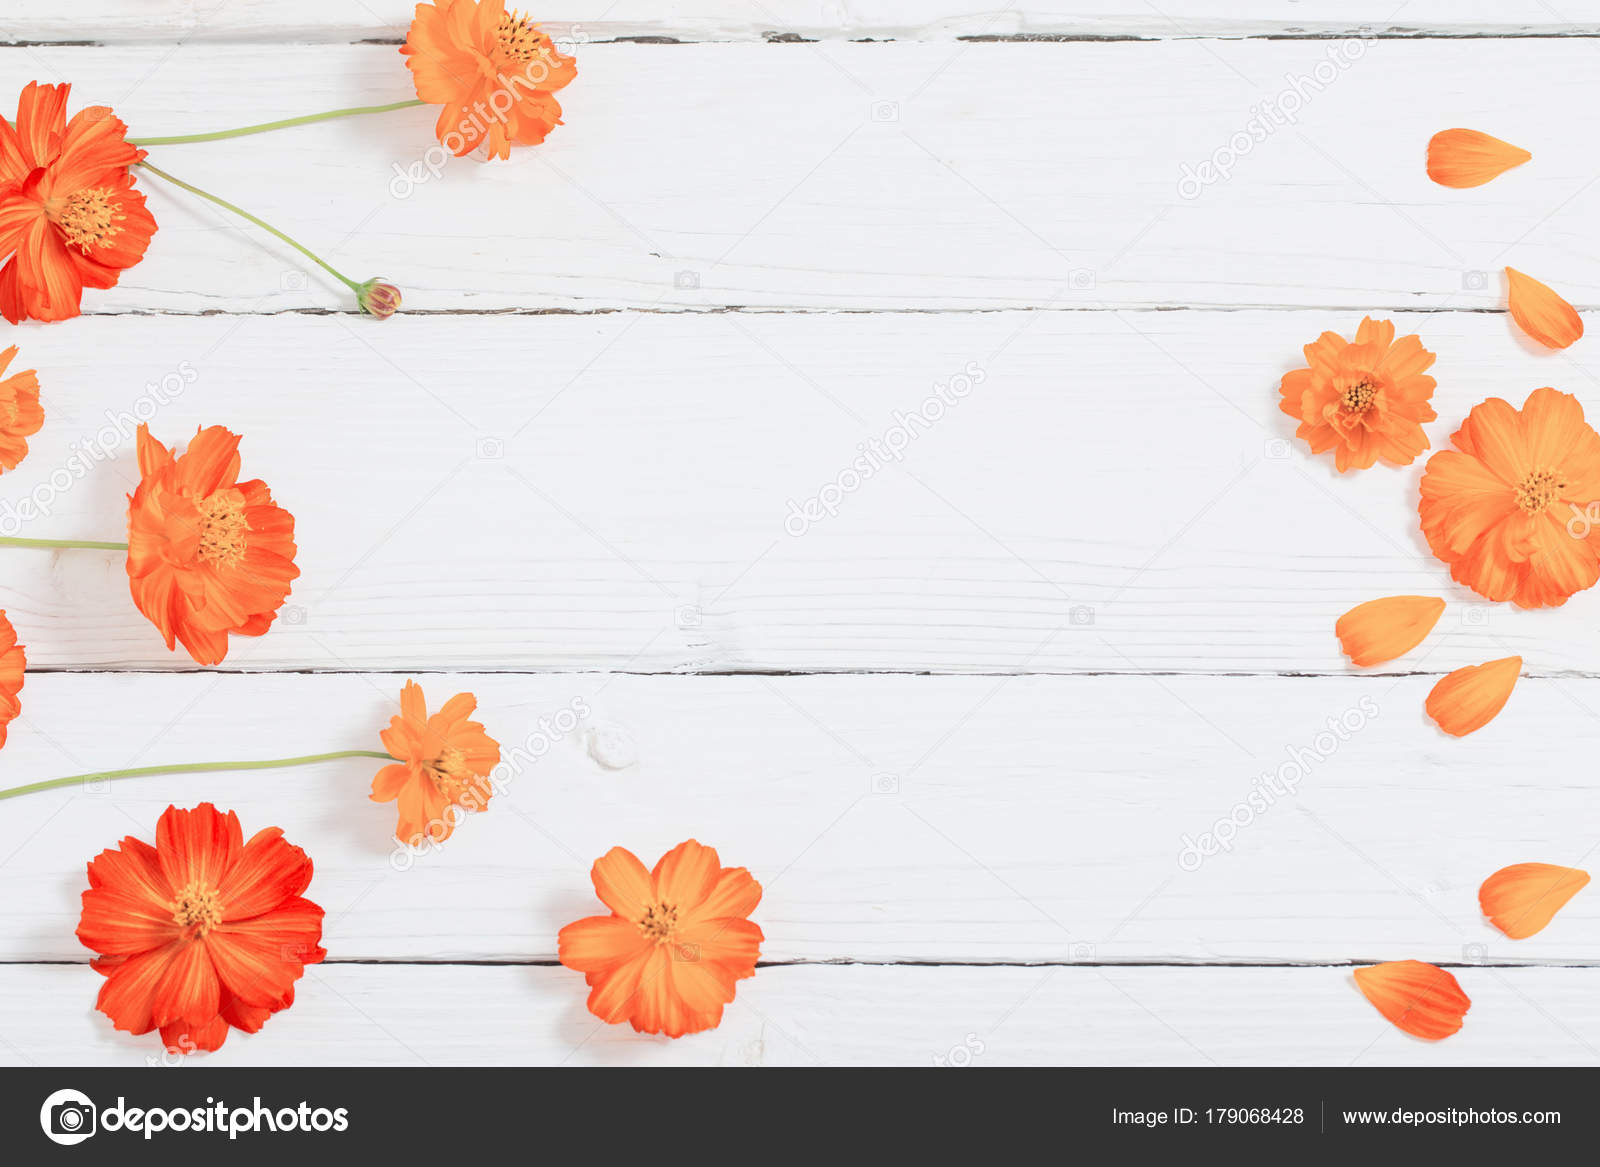 Orange flower background Stock Photos, Royalty Free Orange flower background  Images | Depositphotos